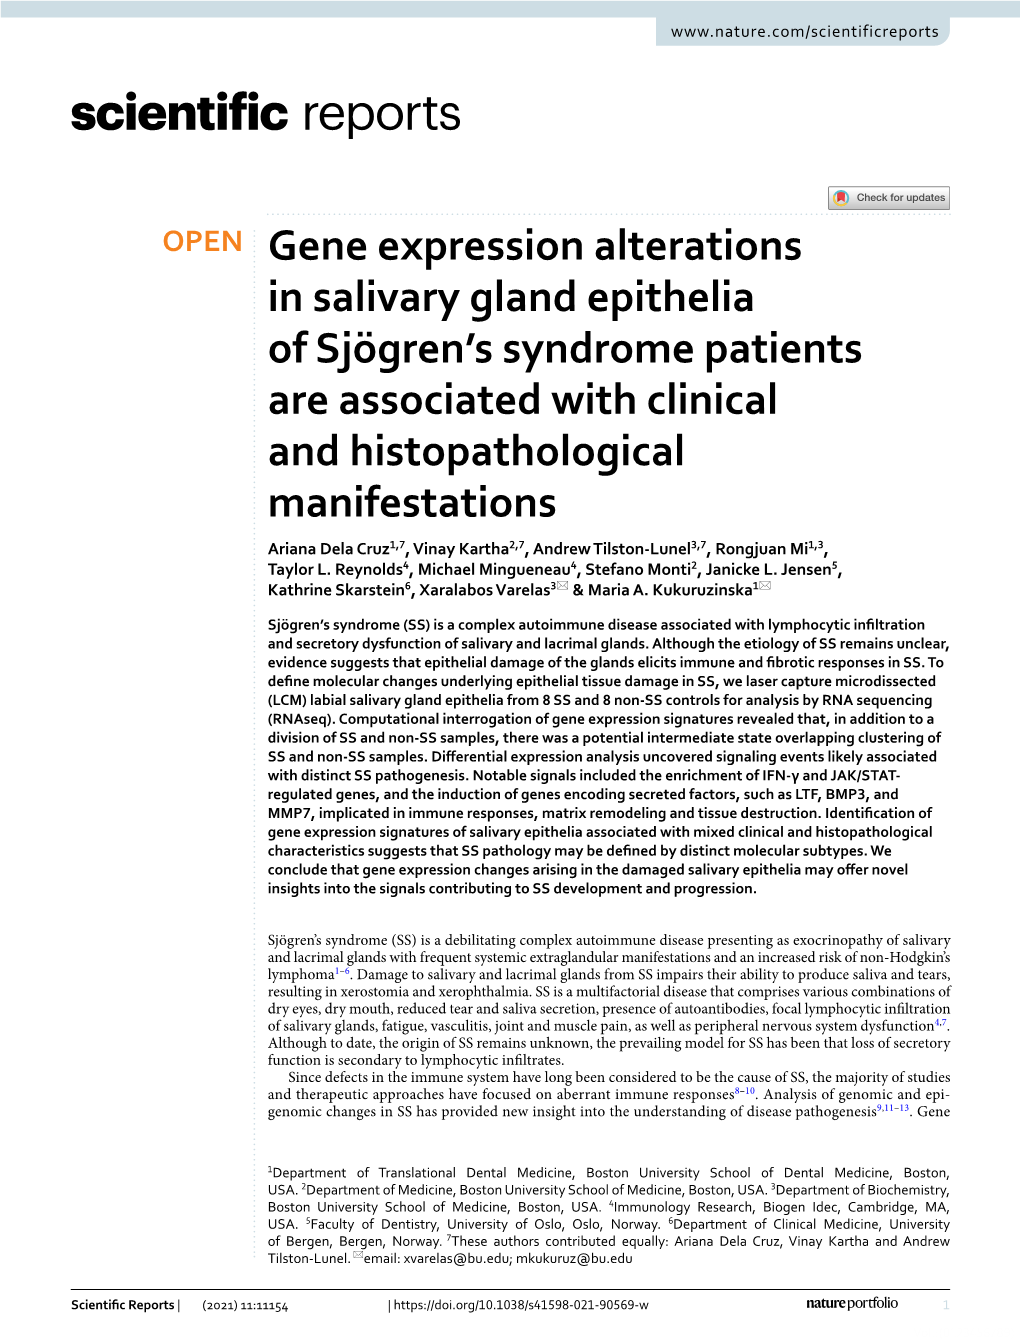 Gene Expression Alterations in Salivary Gland Epithelia of Sjögren's